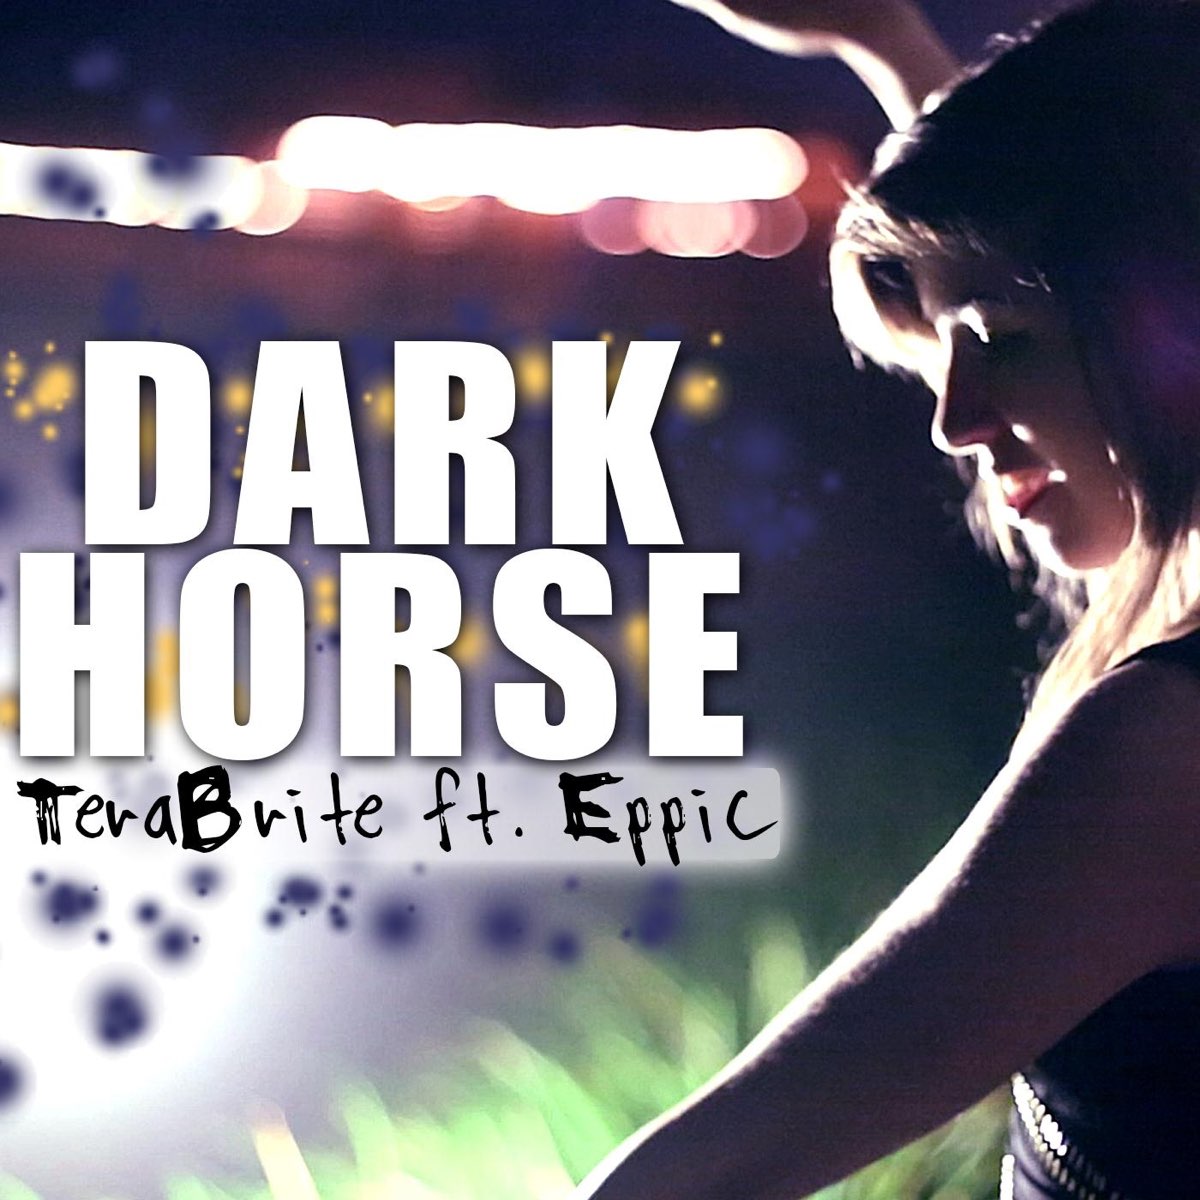 Dark horse feat juicy j katy. Песня Dark Horse. Katy Perry Dark Horse обложка. Dark Horse песня обложка. Dark Horse feat. Juicy j перевод.